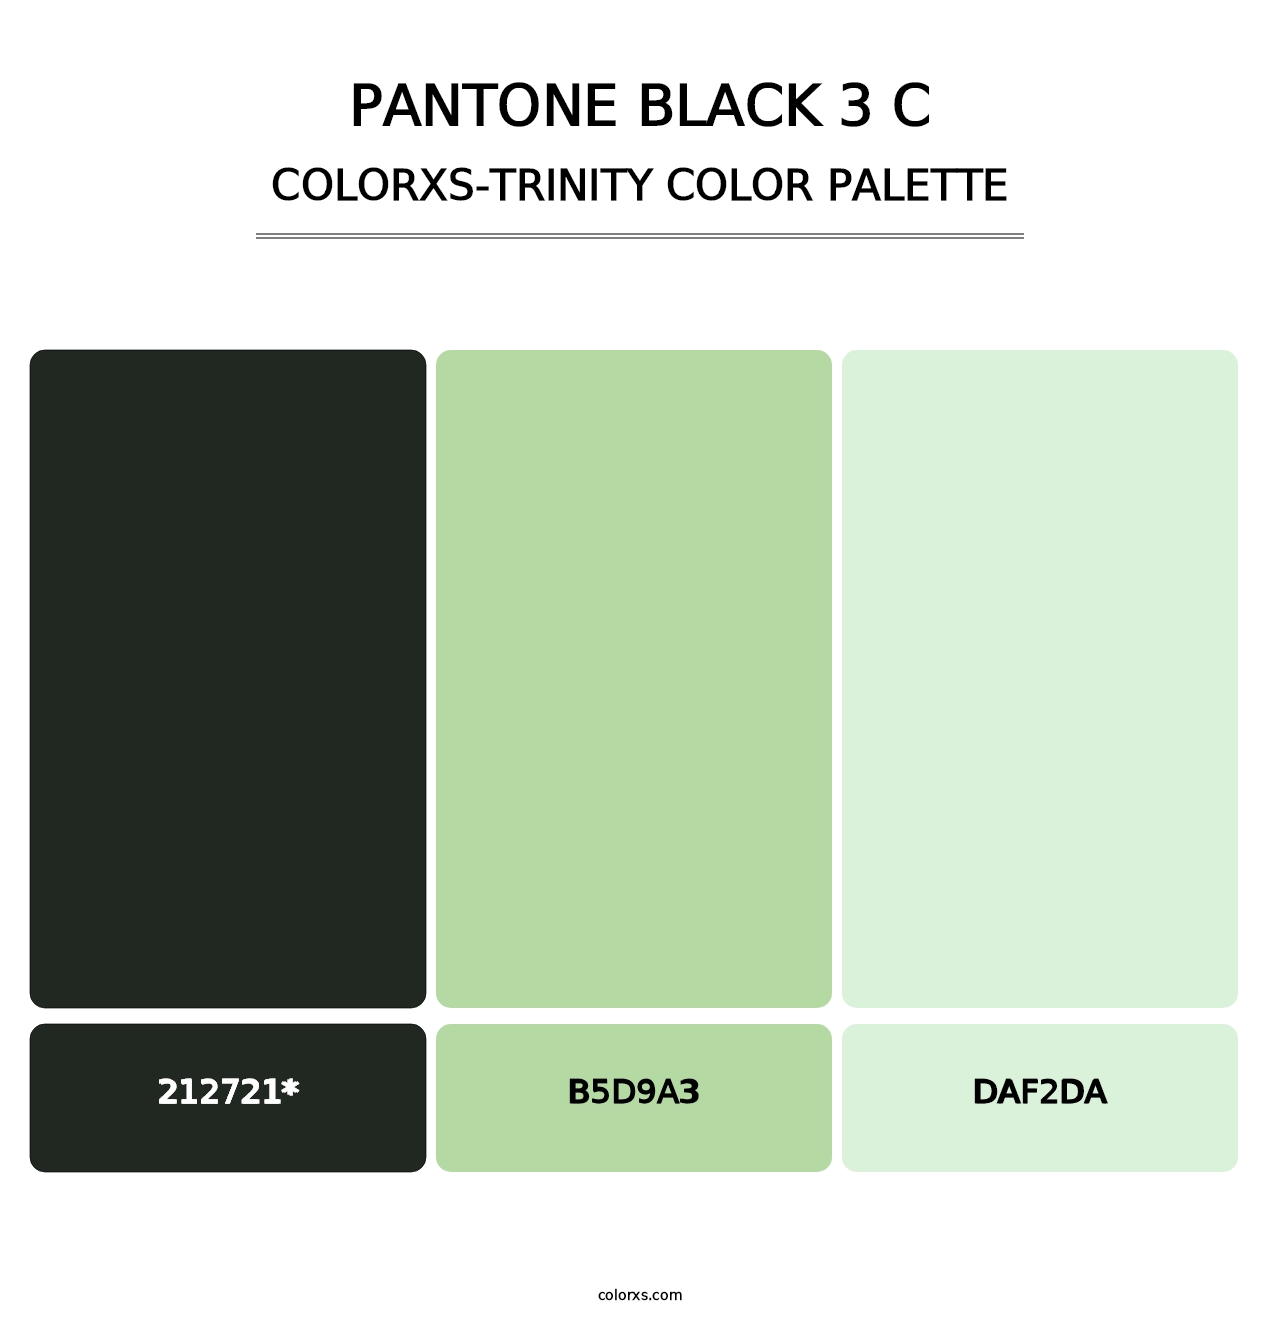 PANTONE Black 3 C - Colorxs Trinity Palette